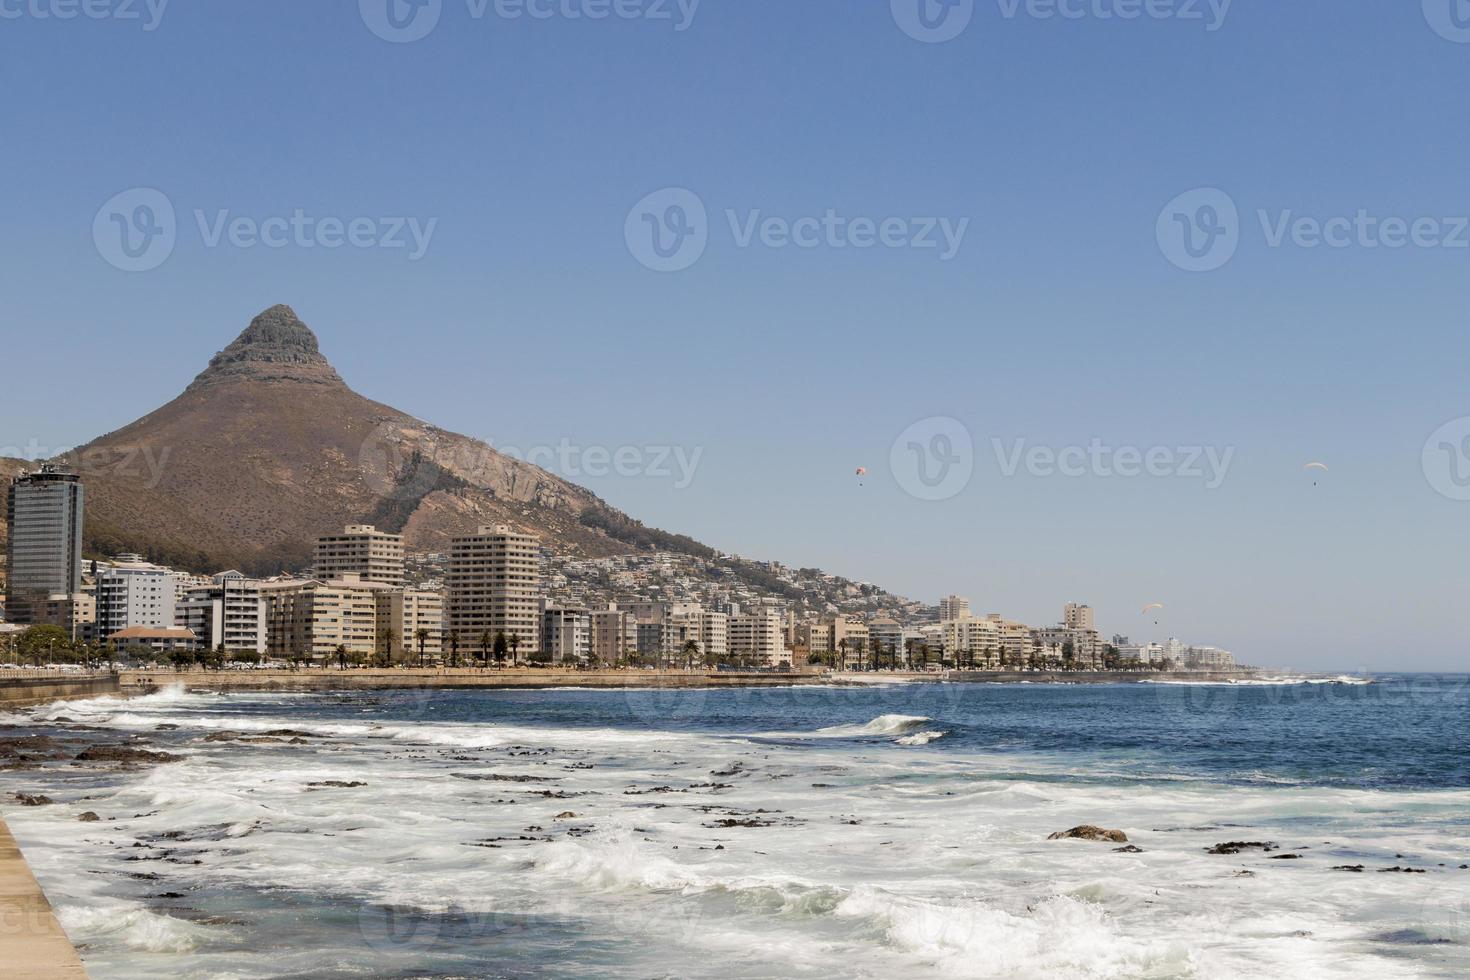 golven en bergen, zeepunt, promenade Kaapstad Zuid-Afrika. foto